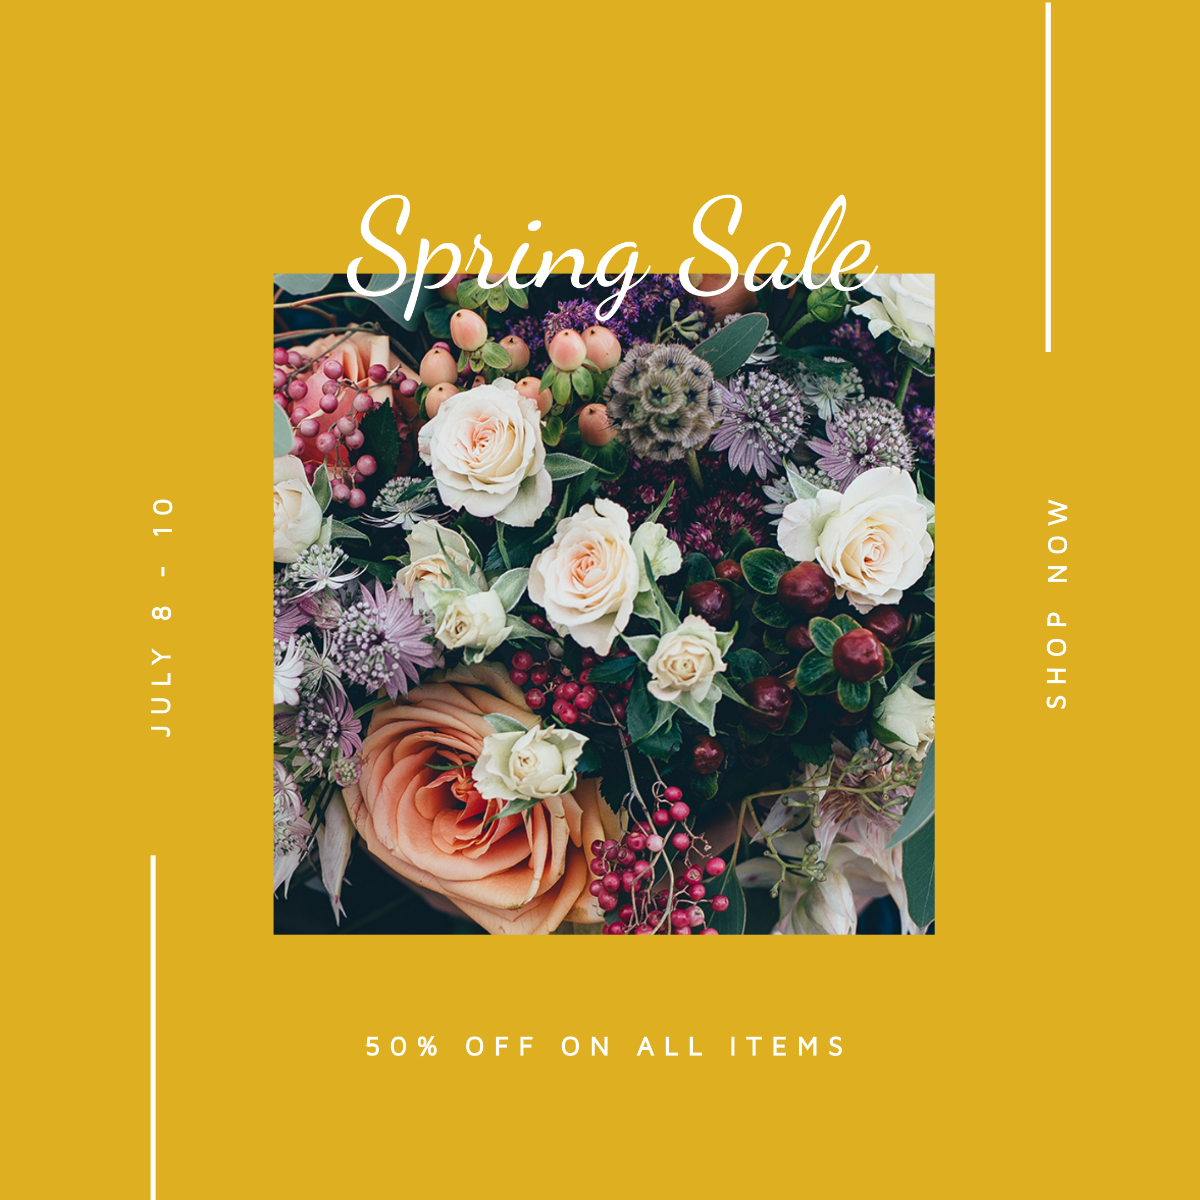 Spring Sale Instagram Post Template